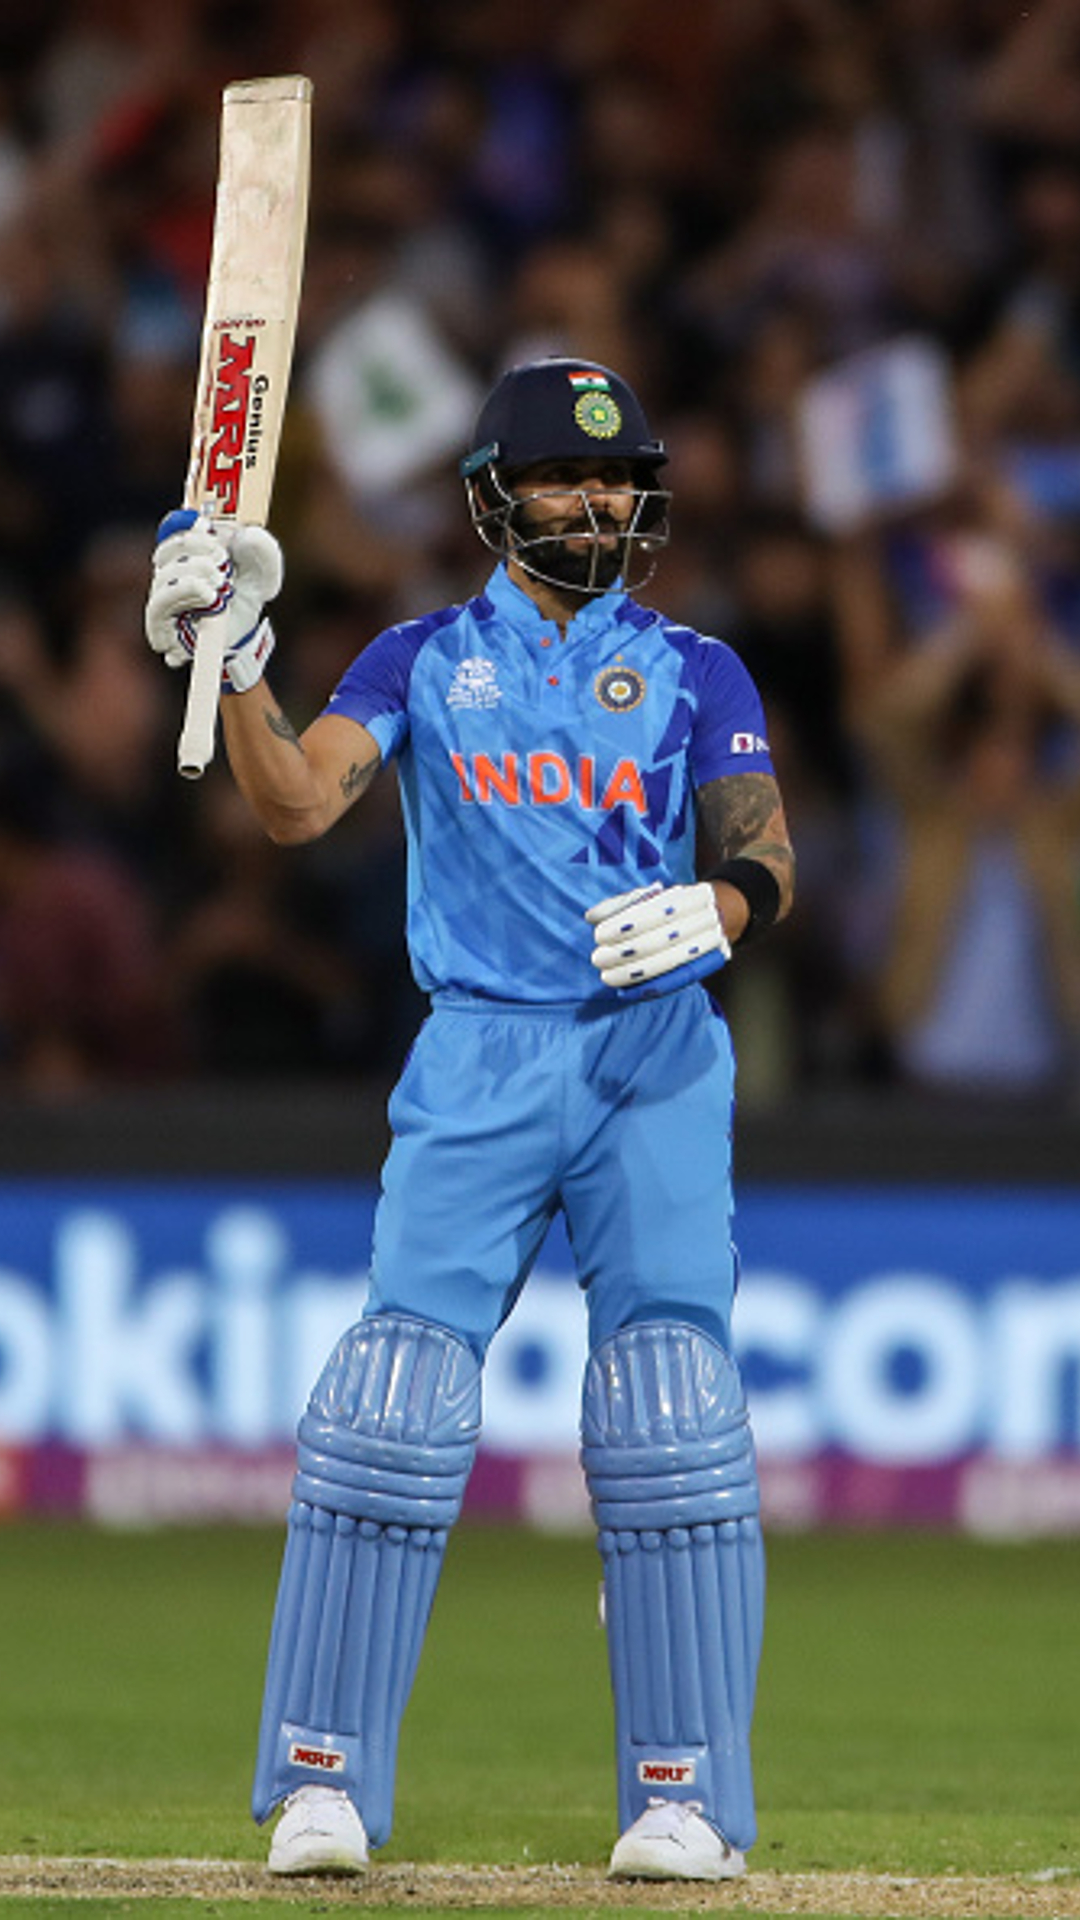 Virat Kohli's last 10 innings New Zealand in ODIs featuring 121 in Mumbai